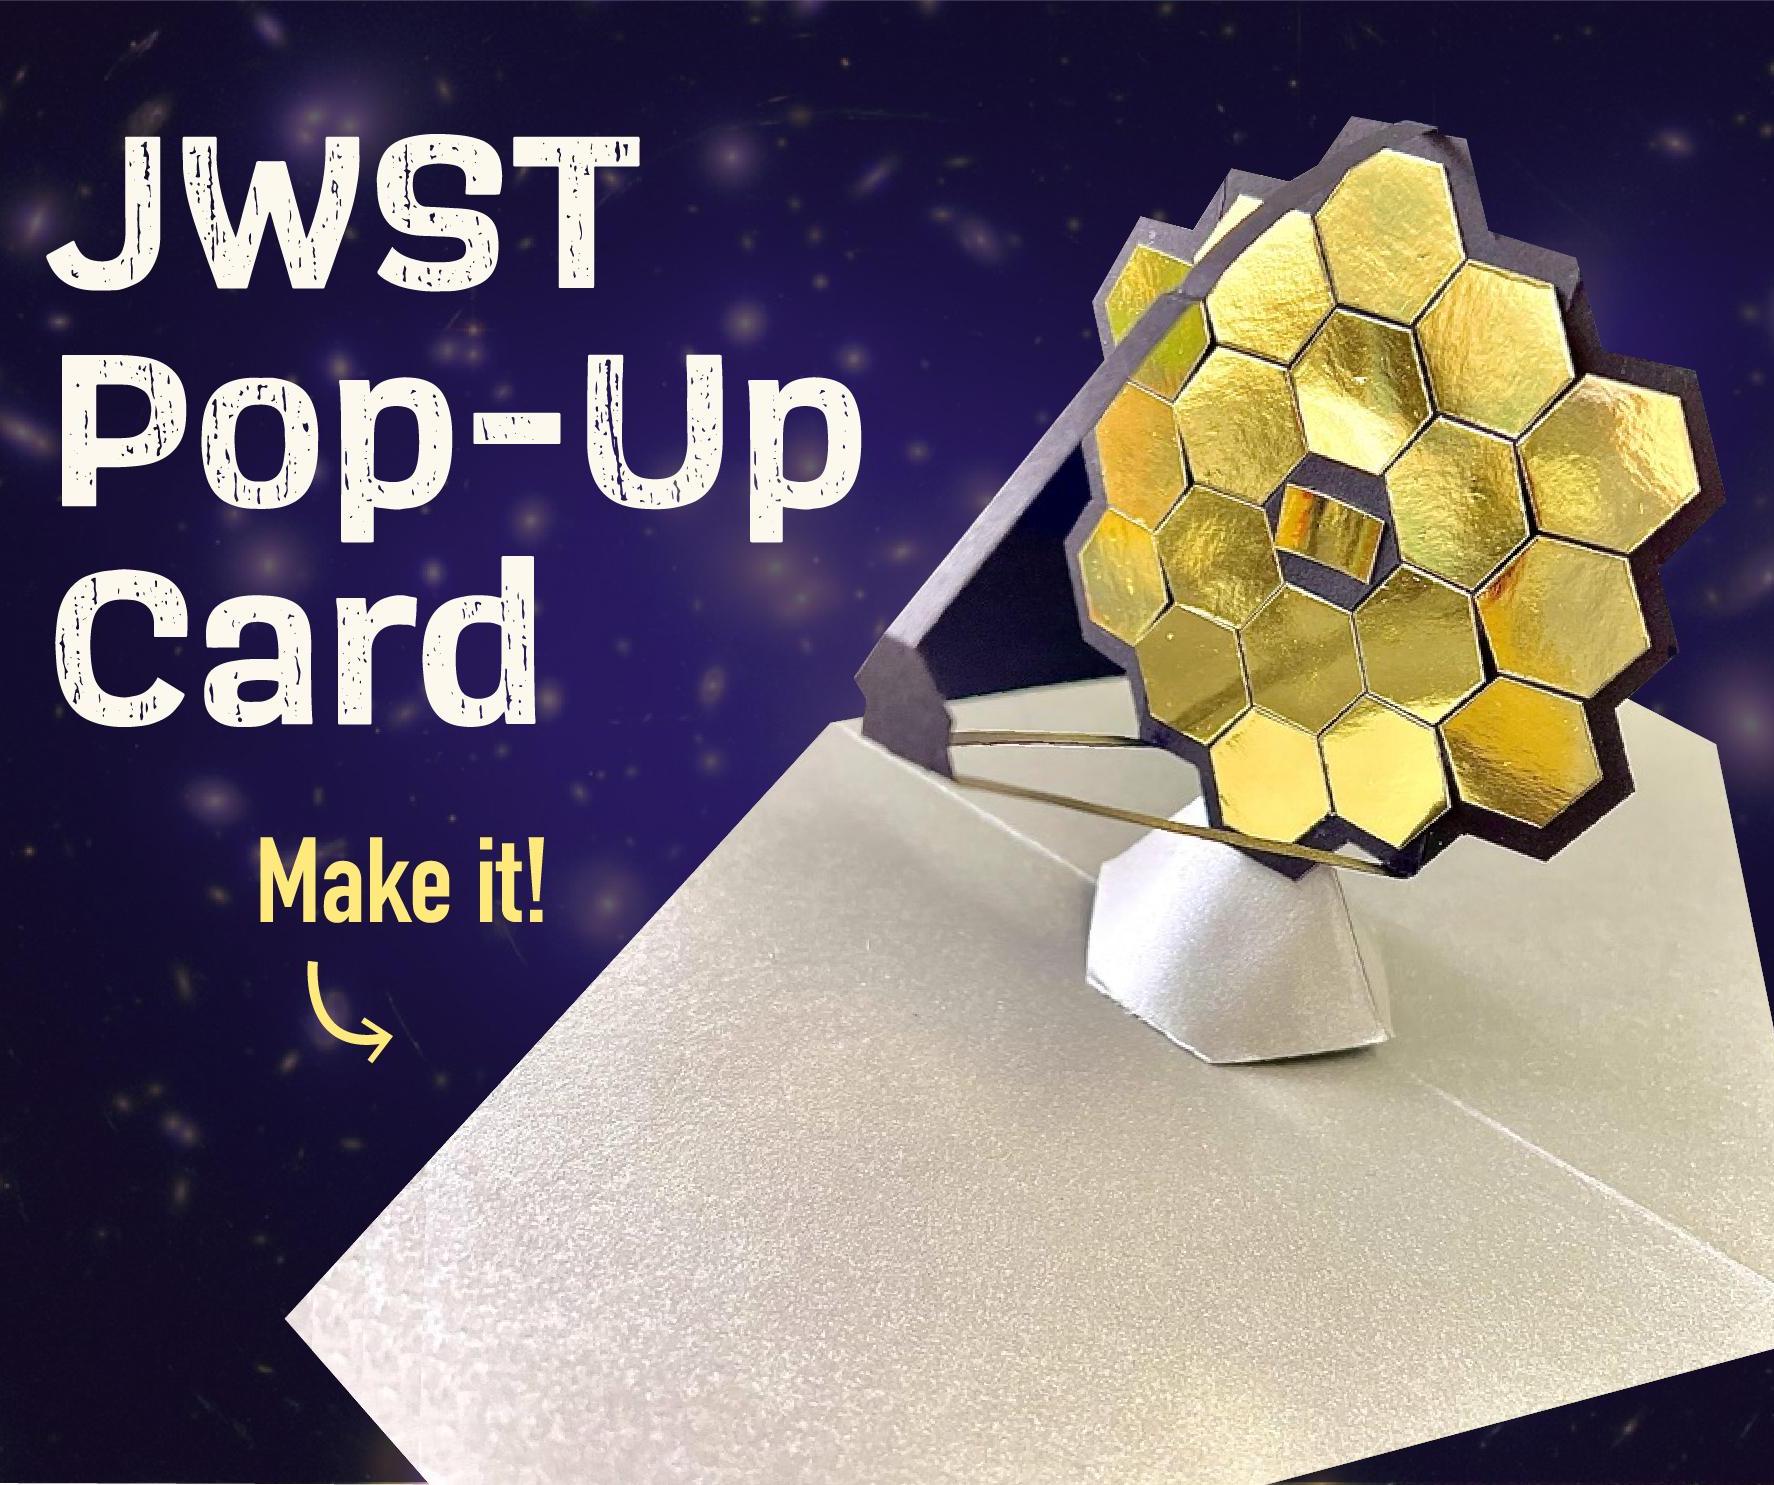 James Webb Space Telescope Pop-Up Card